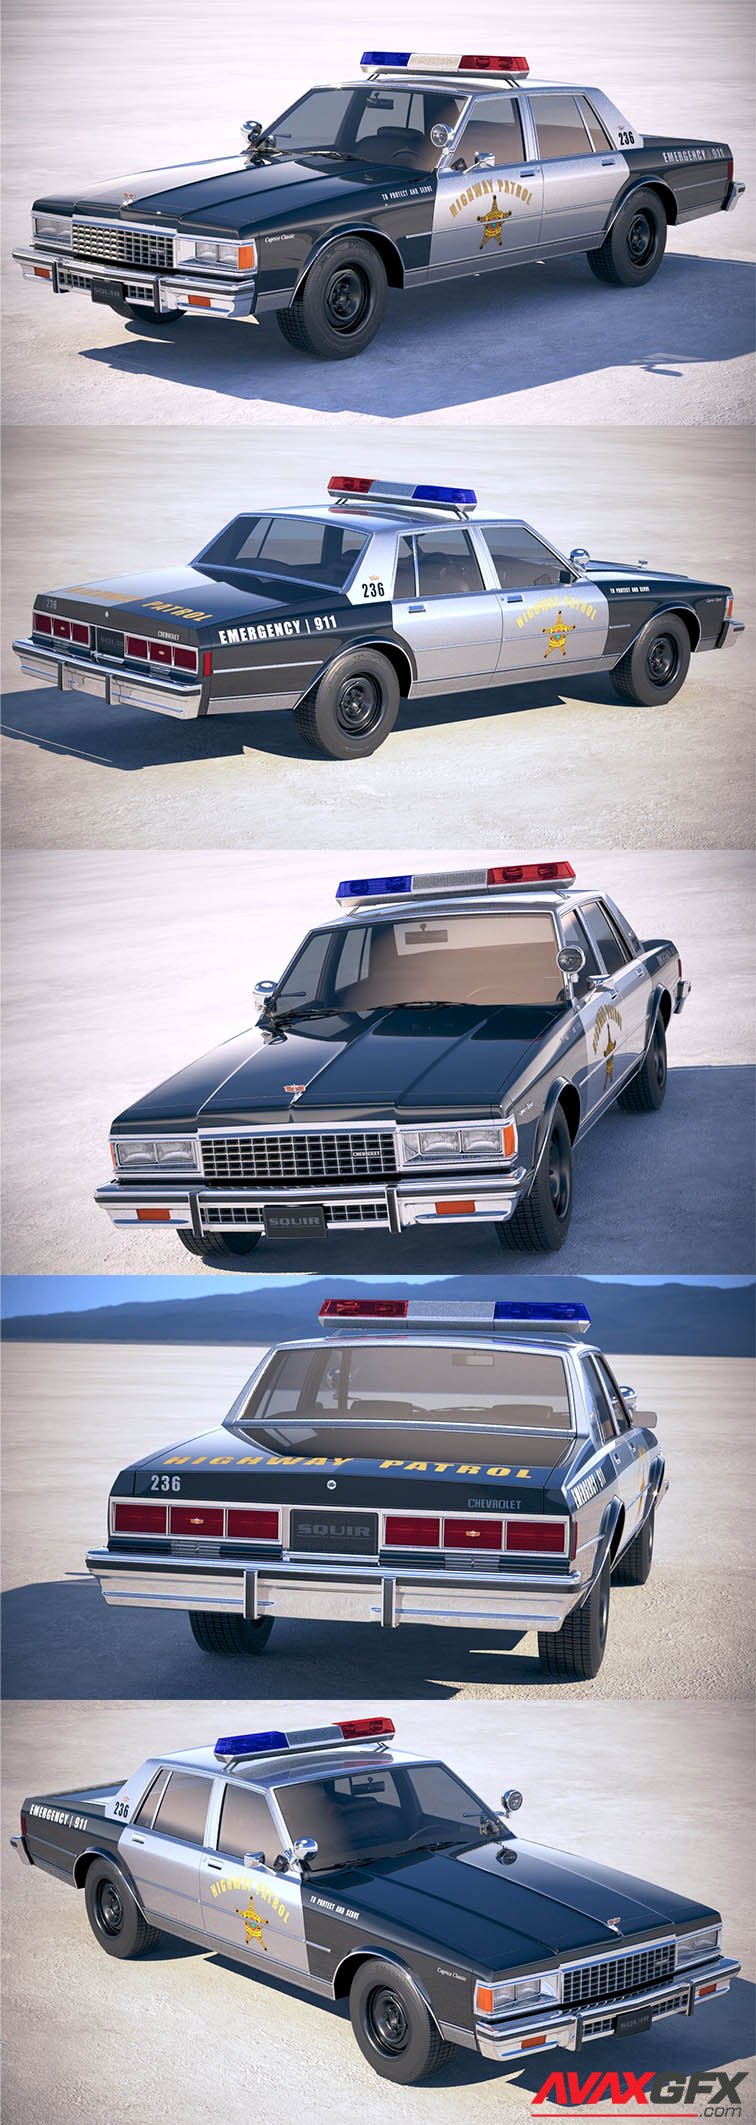 Classic Police Car 1978